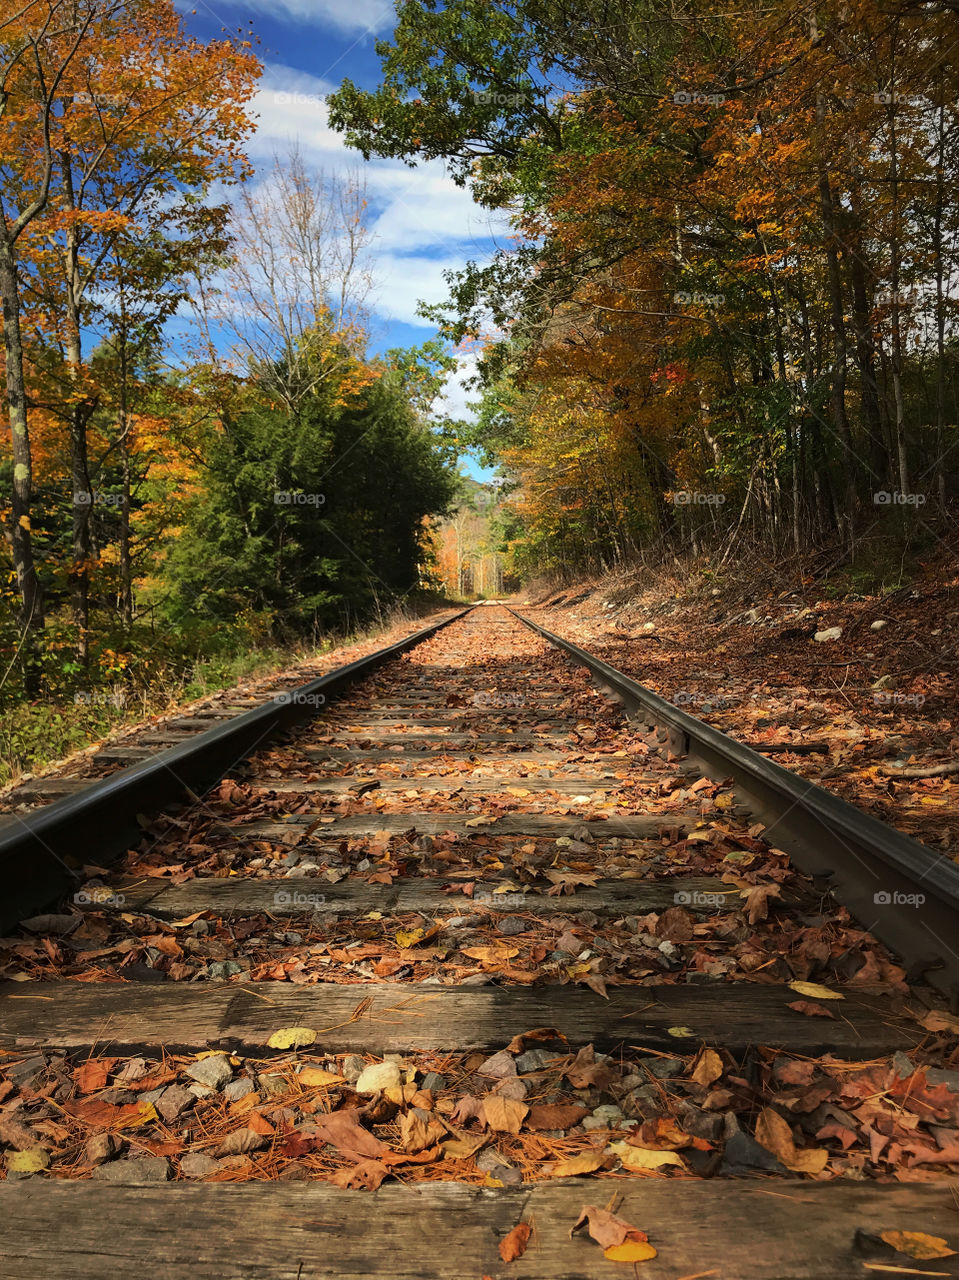 Train tracks running through fall colored trees